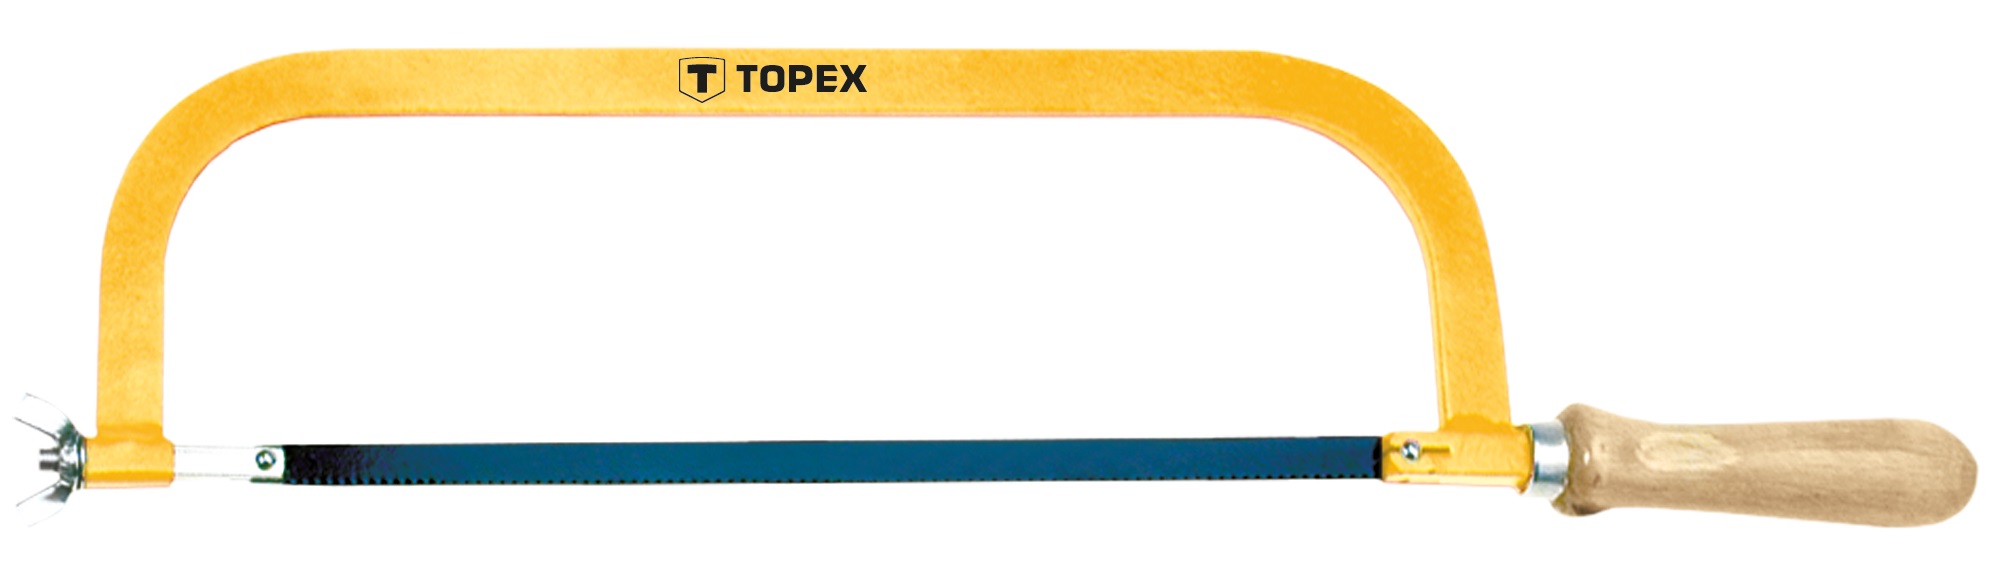 Ножовка по металлу Topex 10A130, 300 мм (10A130) в интернет-магазине, главное фото